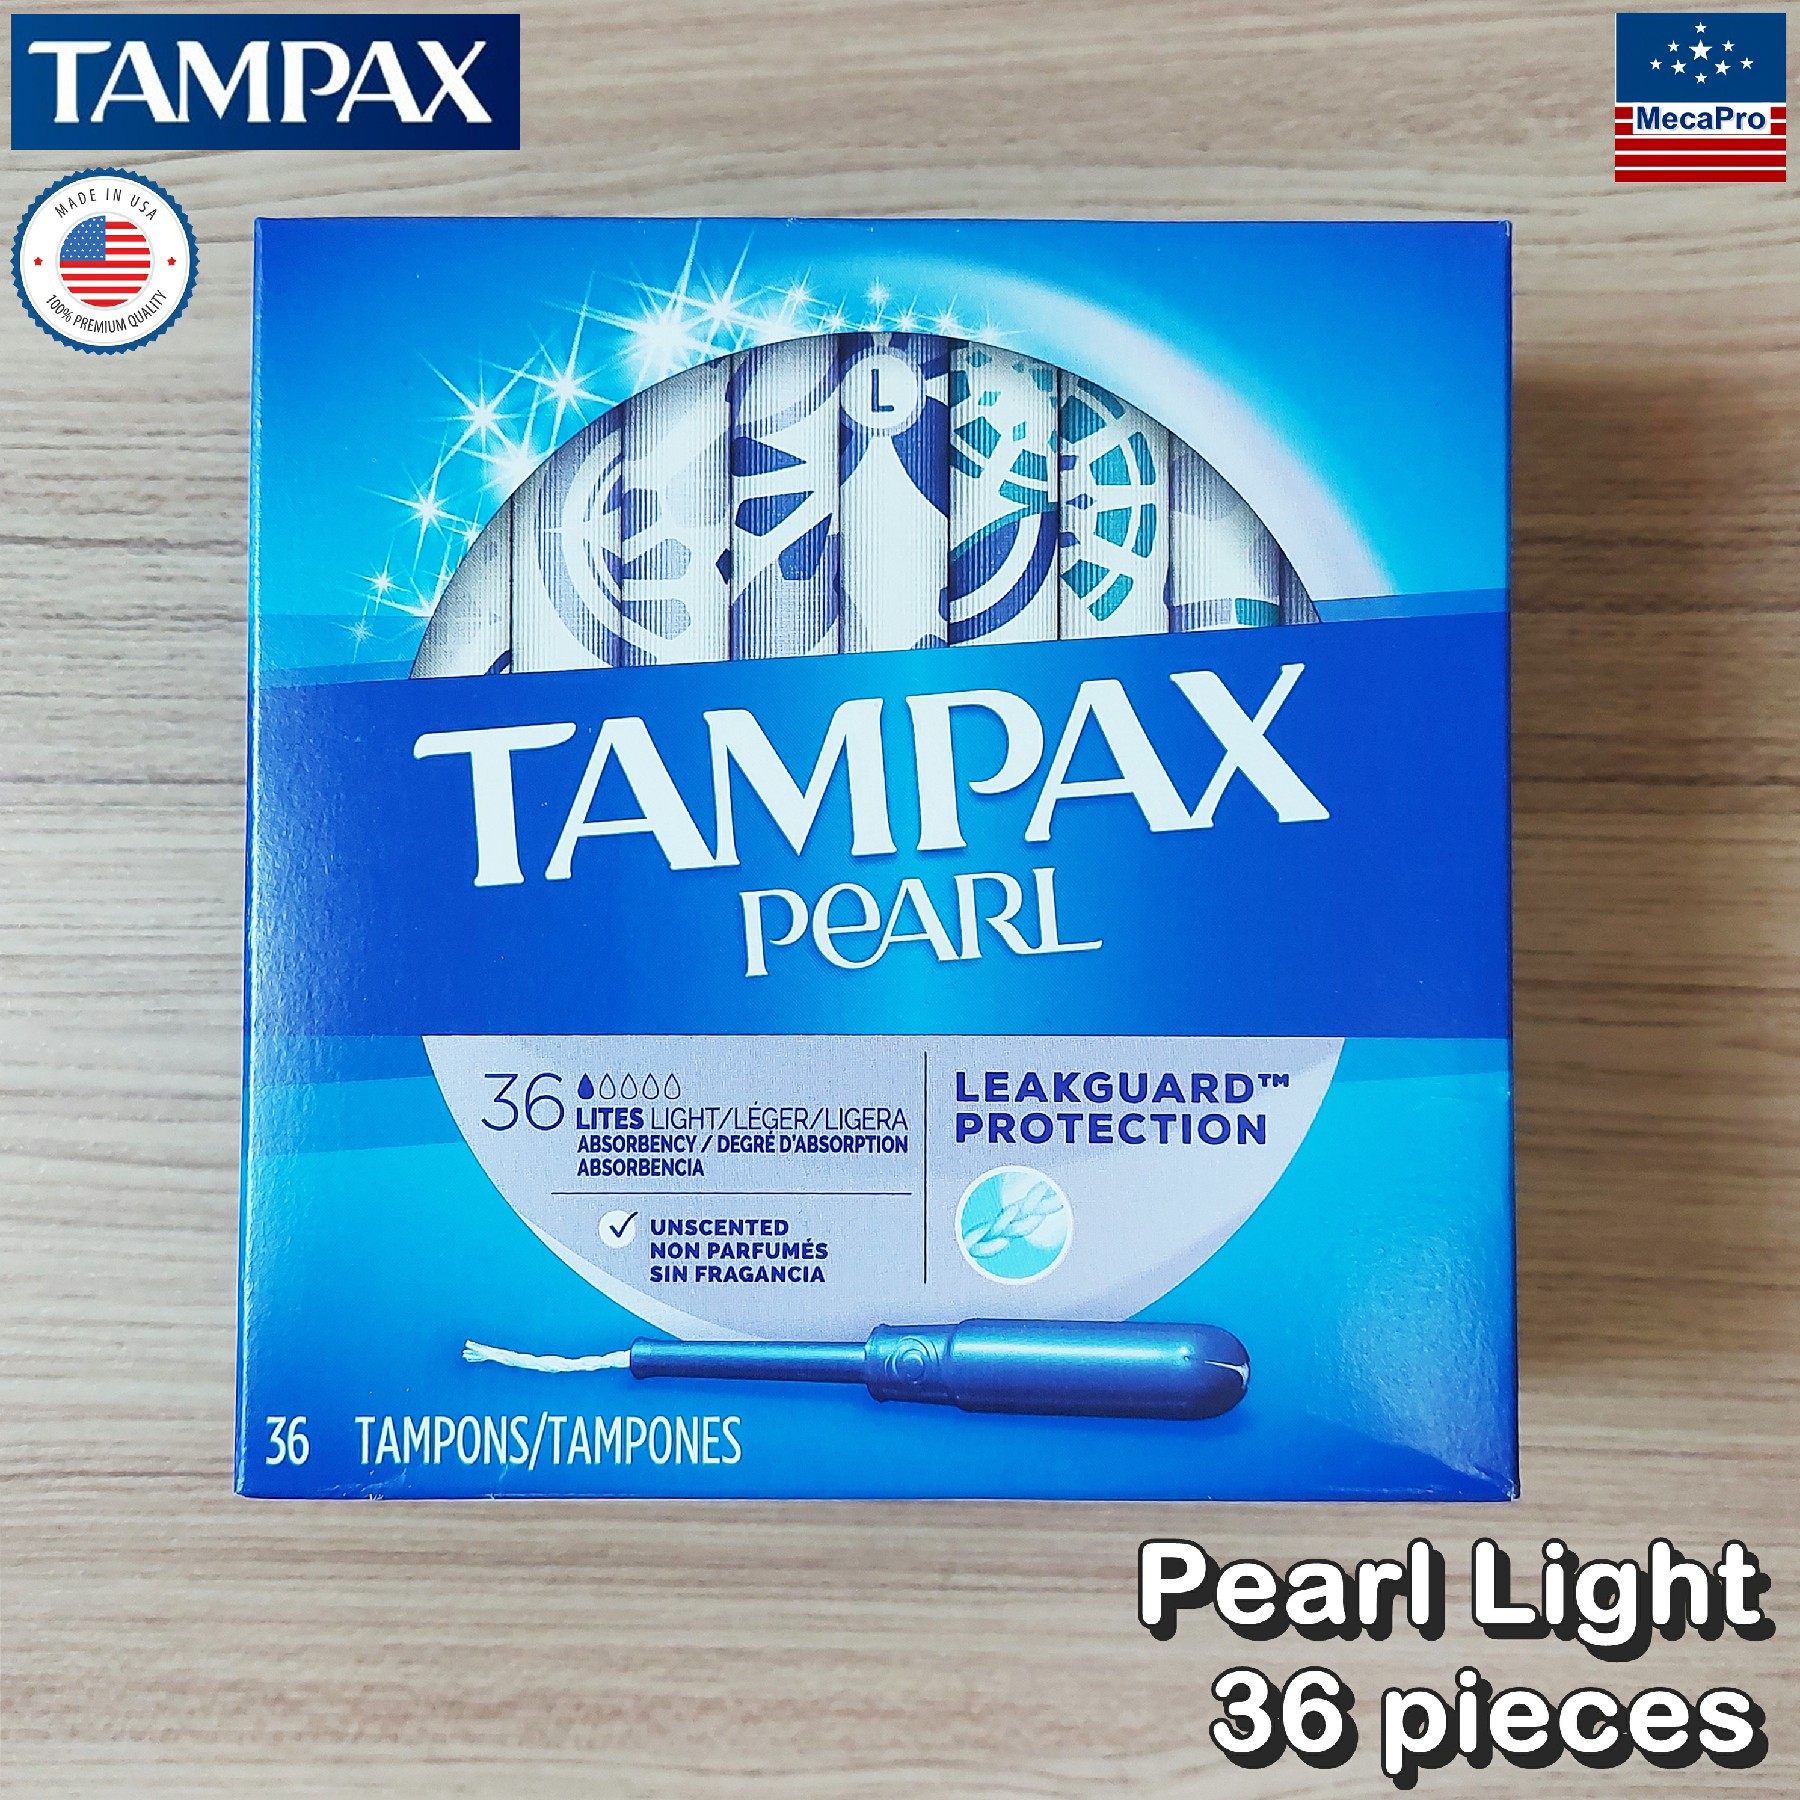 Tampax® Pearl Light Plastic Tampons Unscented 36 pieces ผ้าอนามัยแบบสอด 36 ชิ้น เหมาะกับวันมาน้อย สูตรไร้กลิ่น